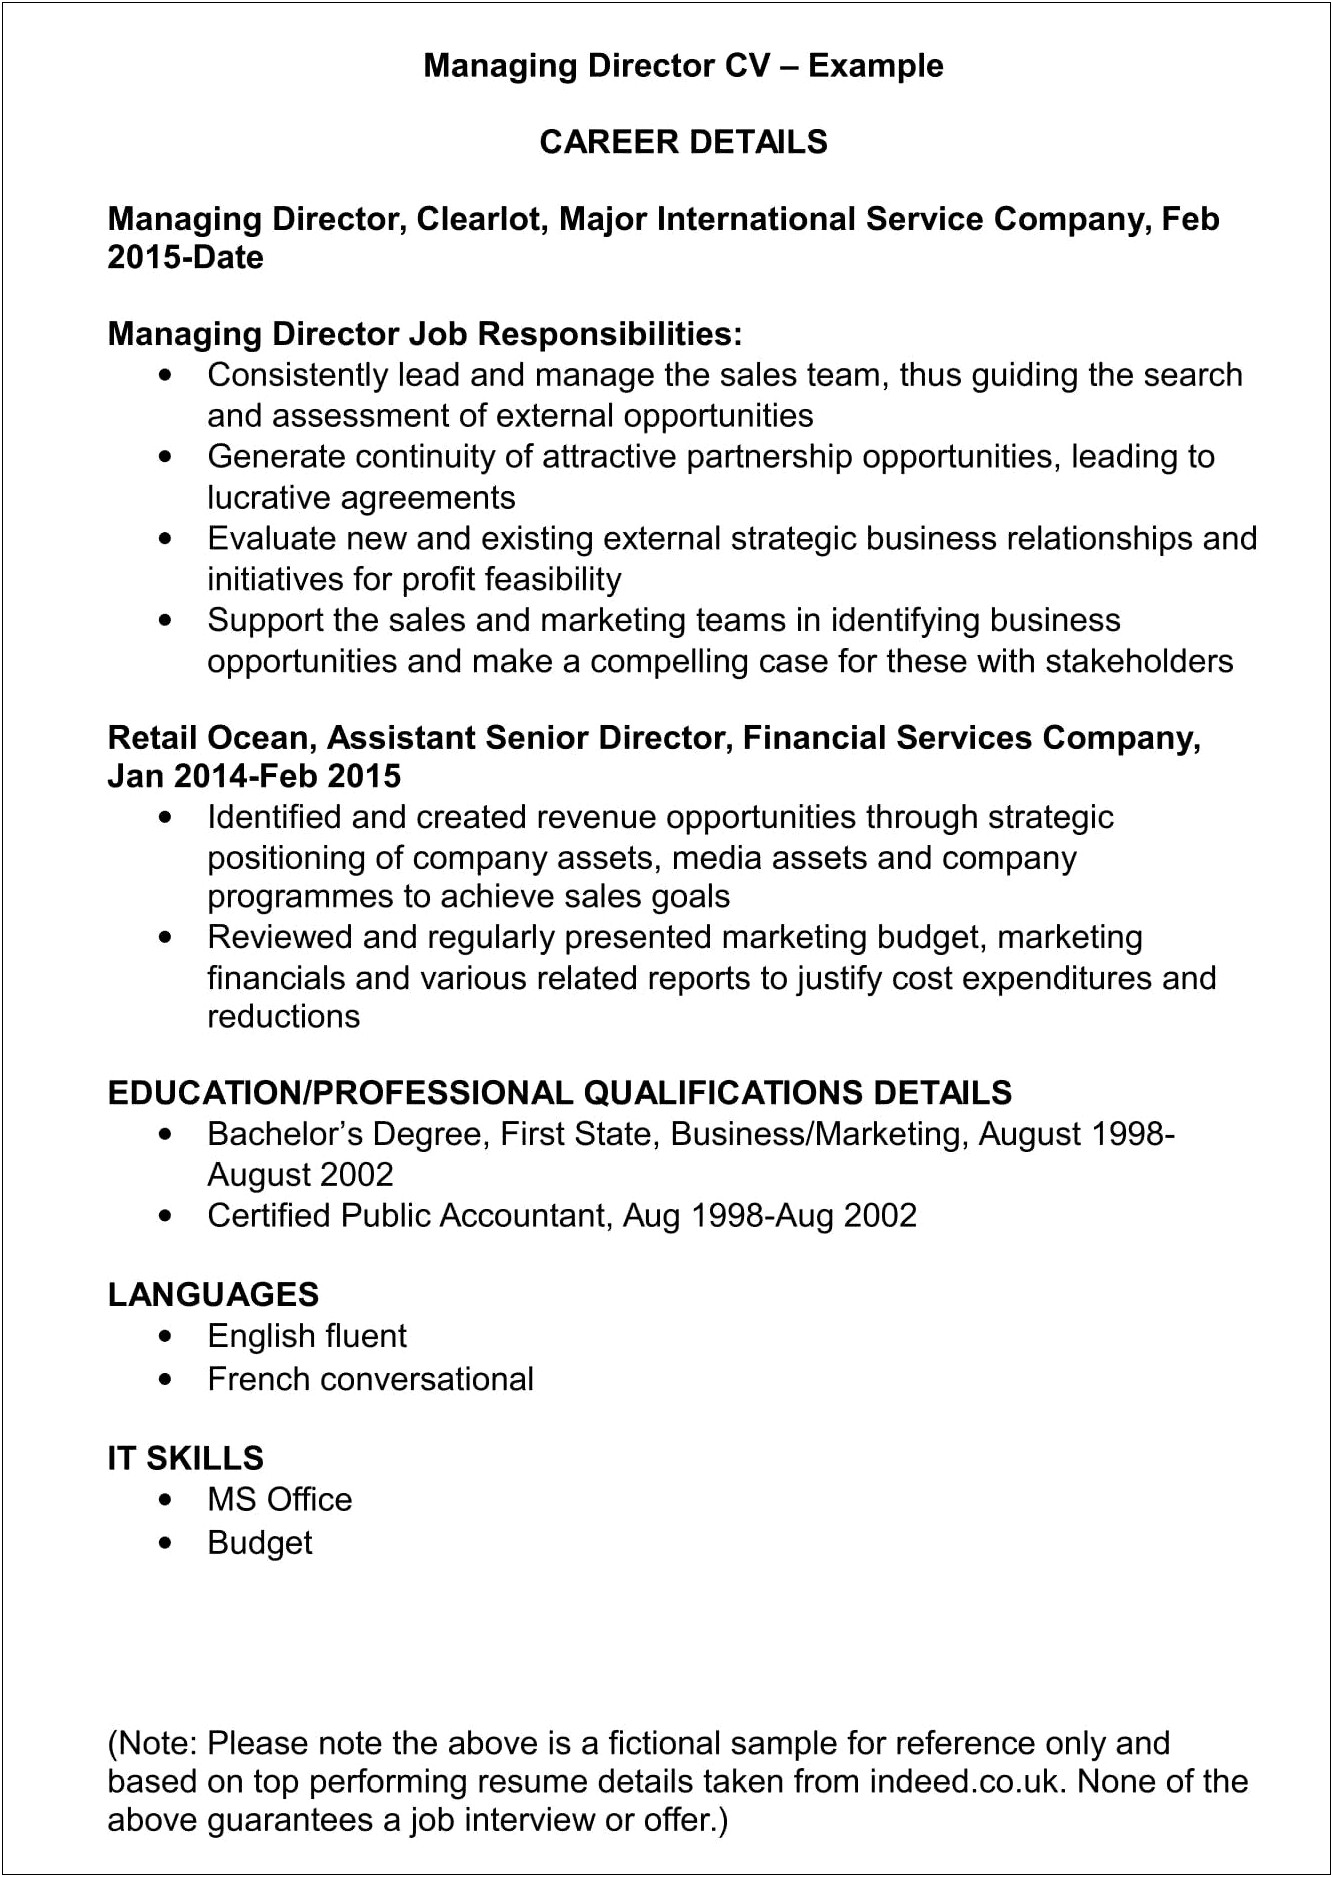 Resume For Director Of Operations Sample Job Description